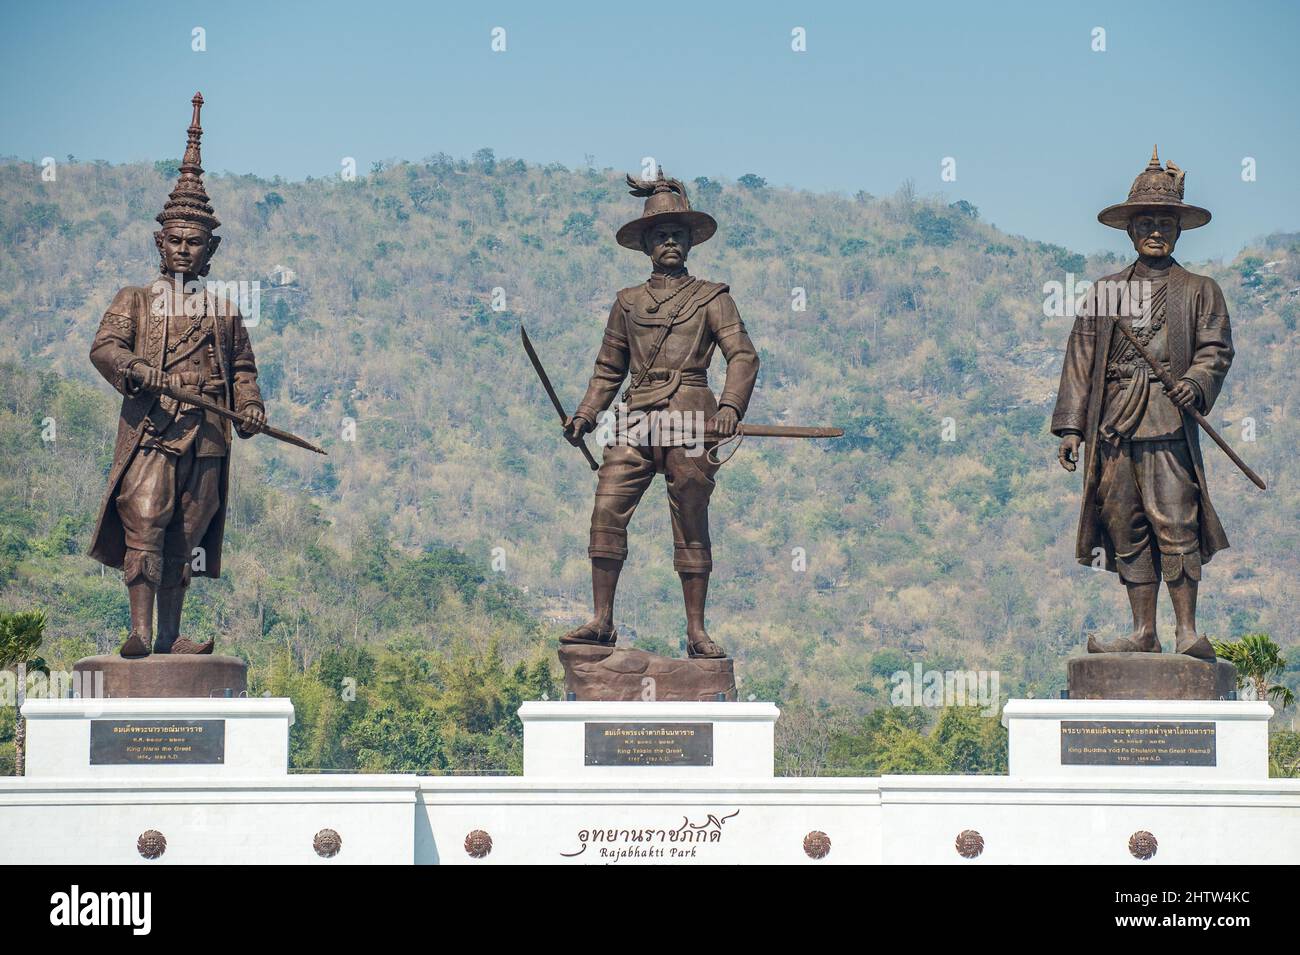 Rajabhakti Park in Hua Hin. Rajabhakti Park displays giant bronze statues of seven historic Thai kings. Stock Photo